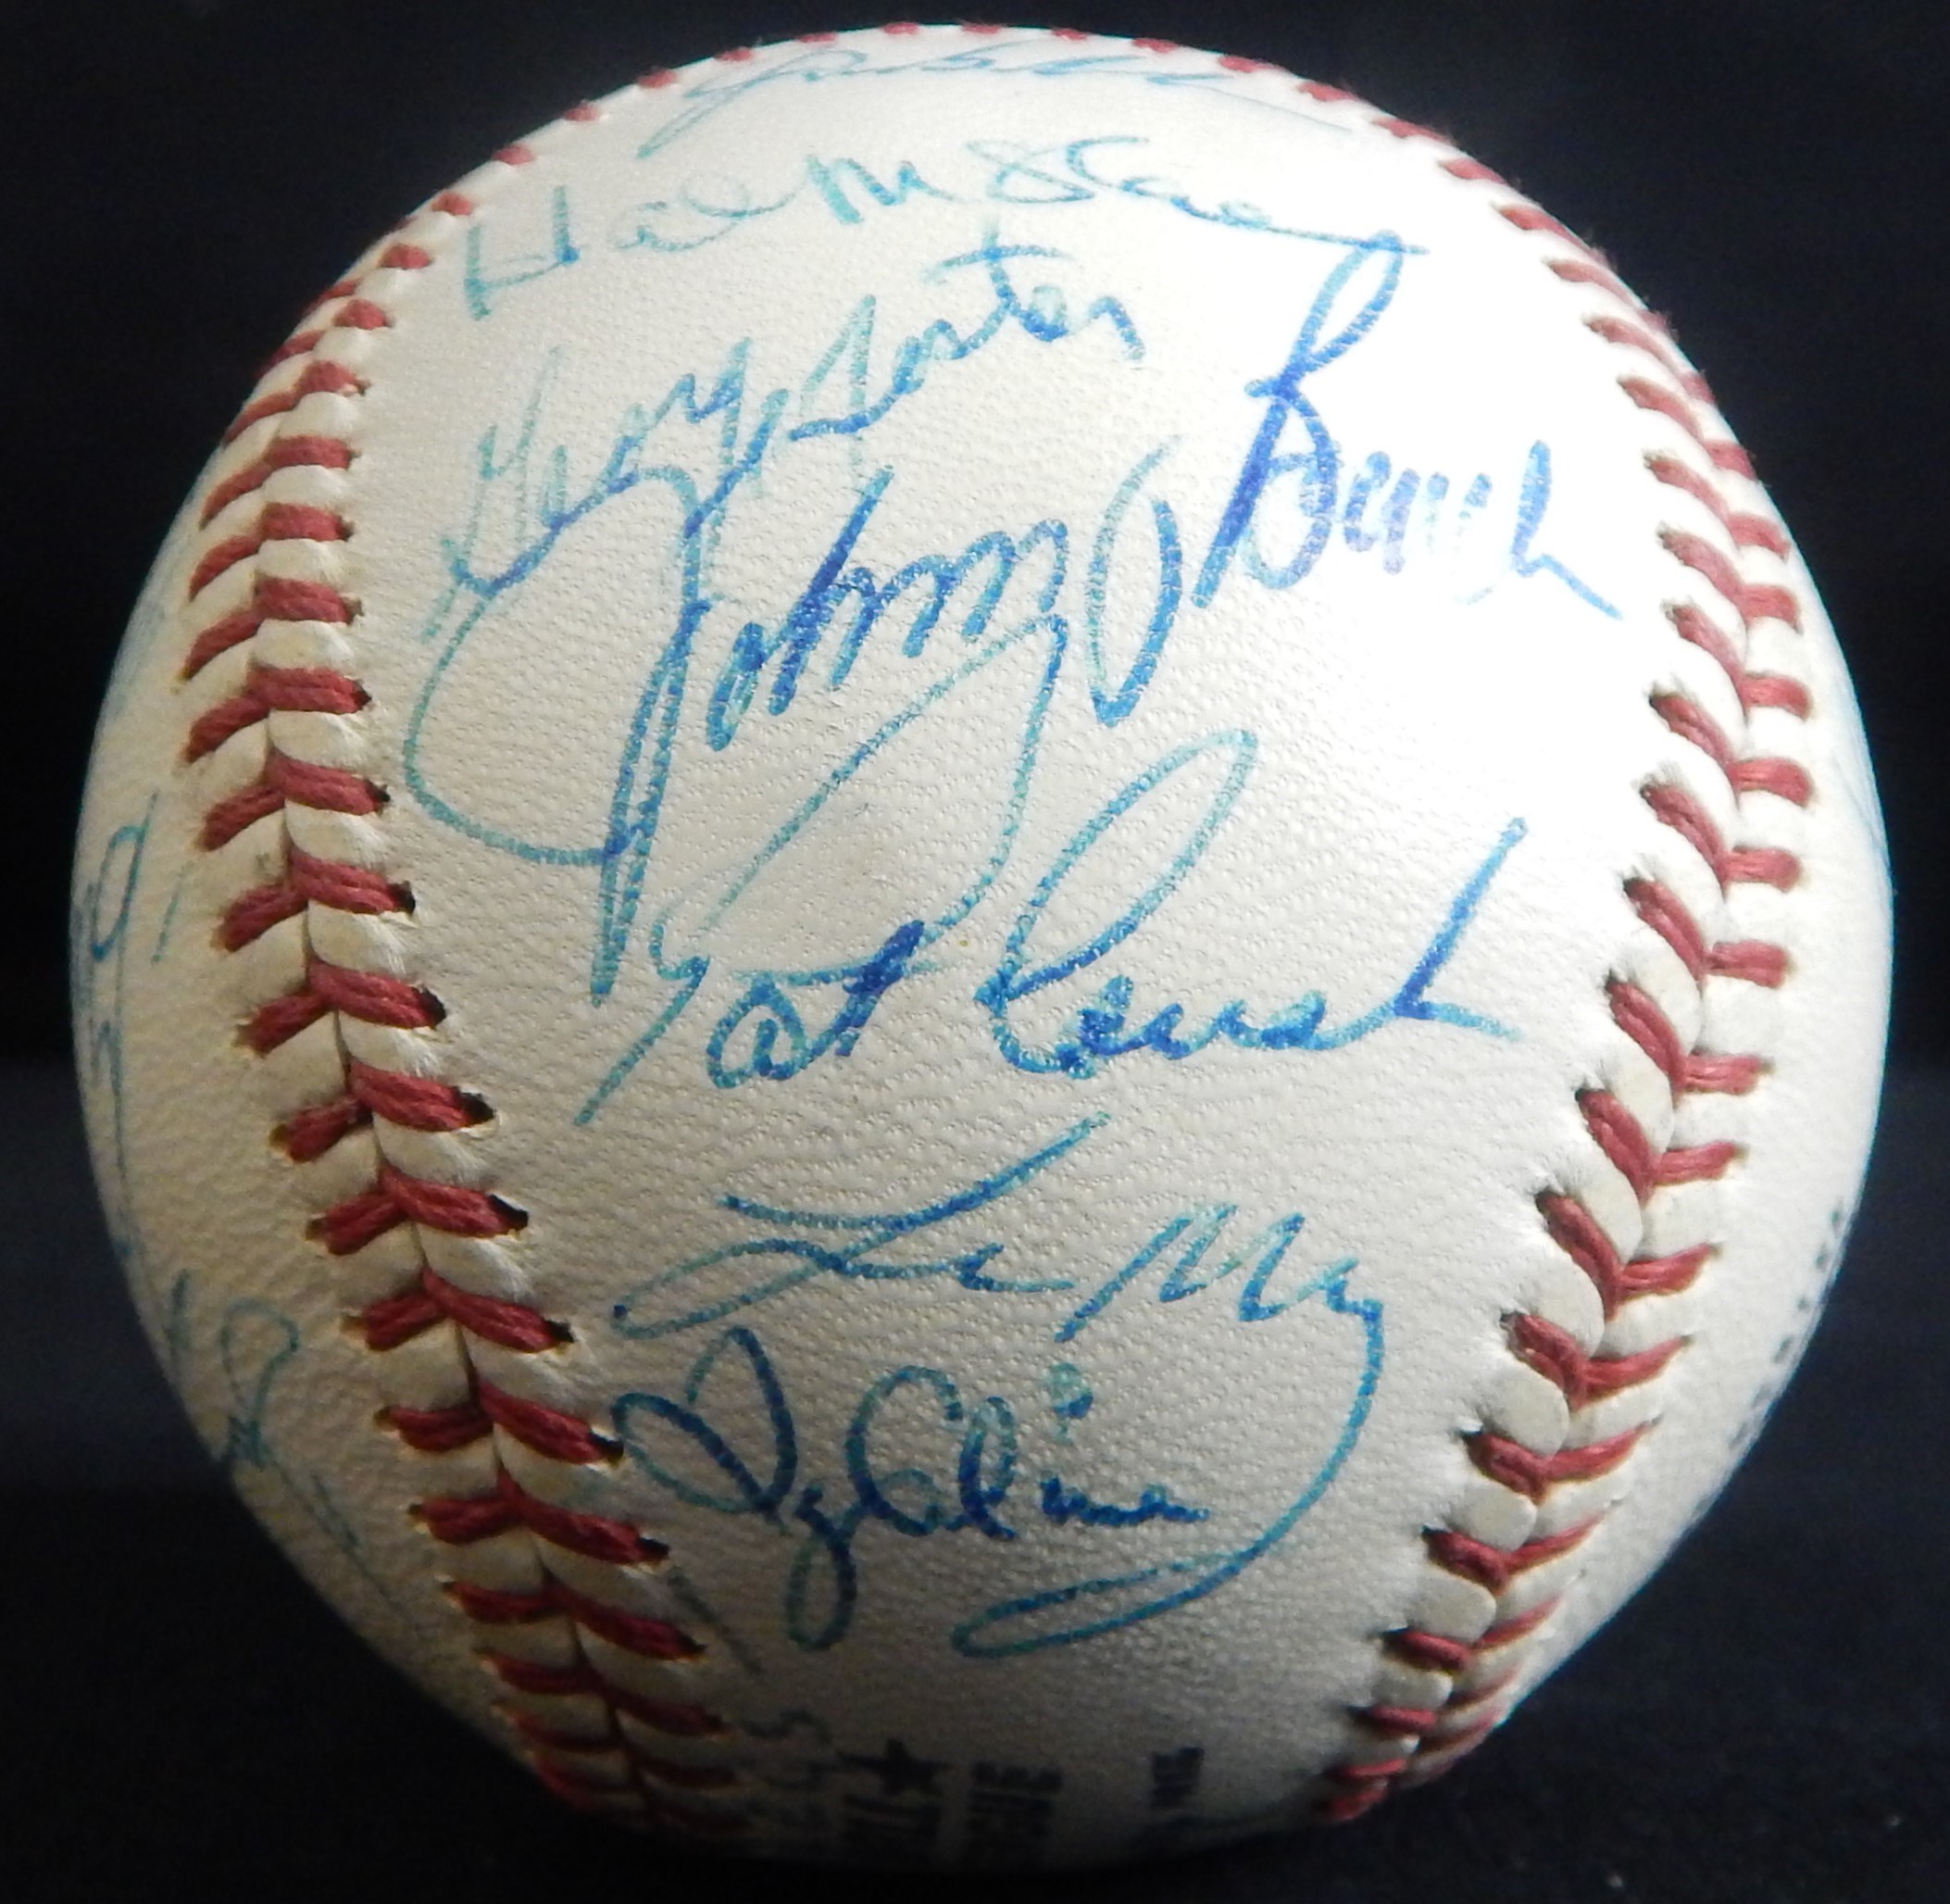 - 1971 Cincinnati Reds Team Signed Baseball (24 Signatures)